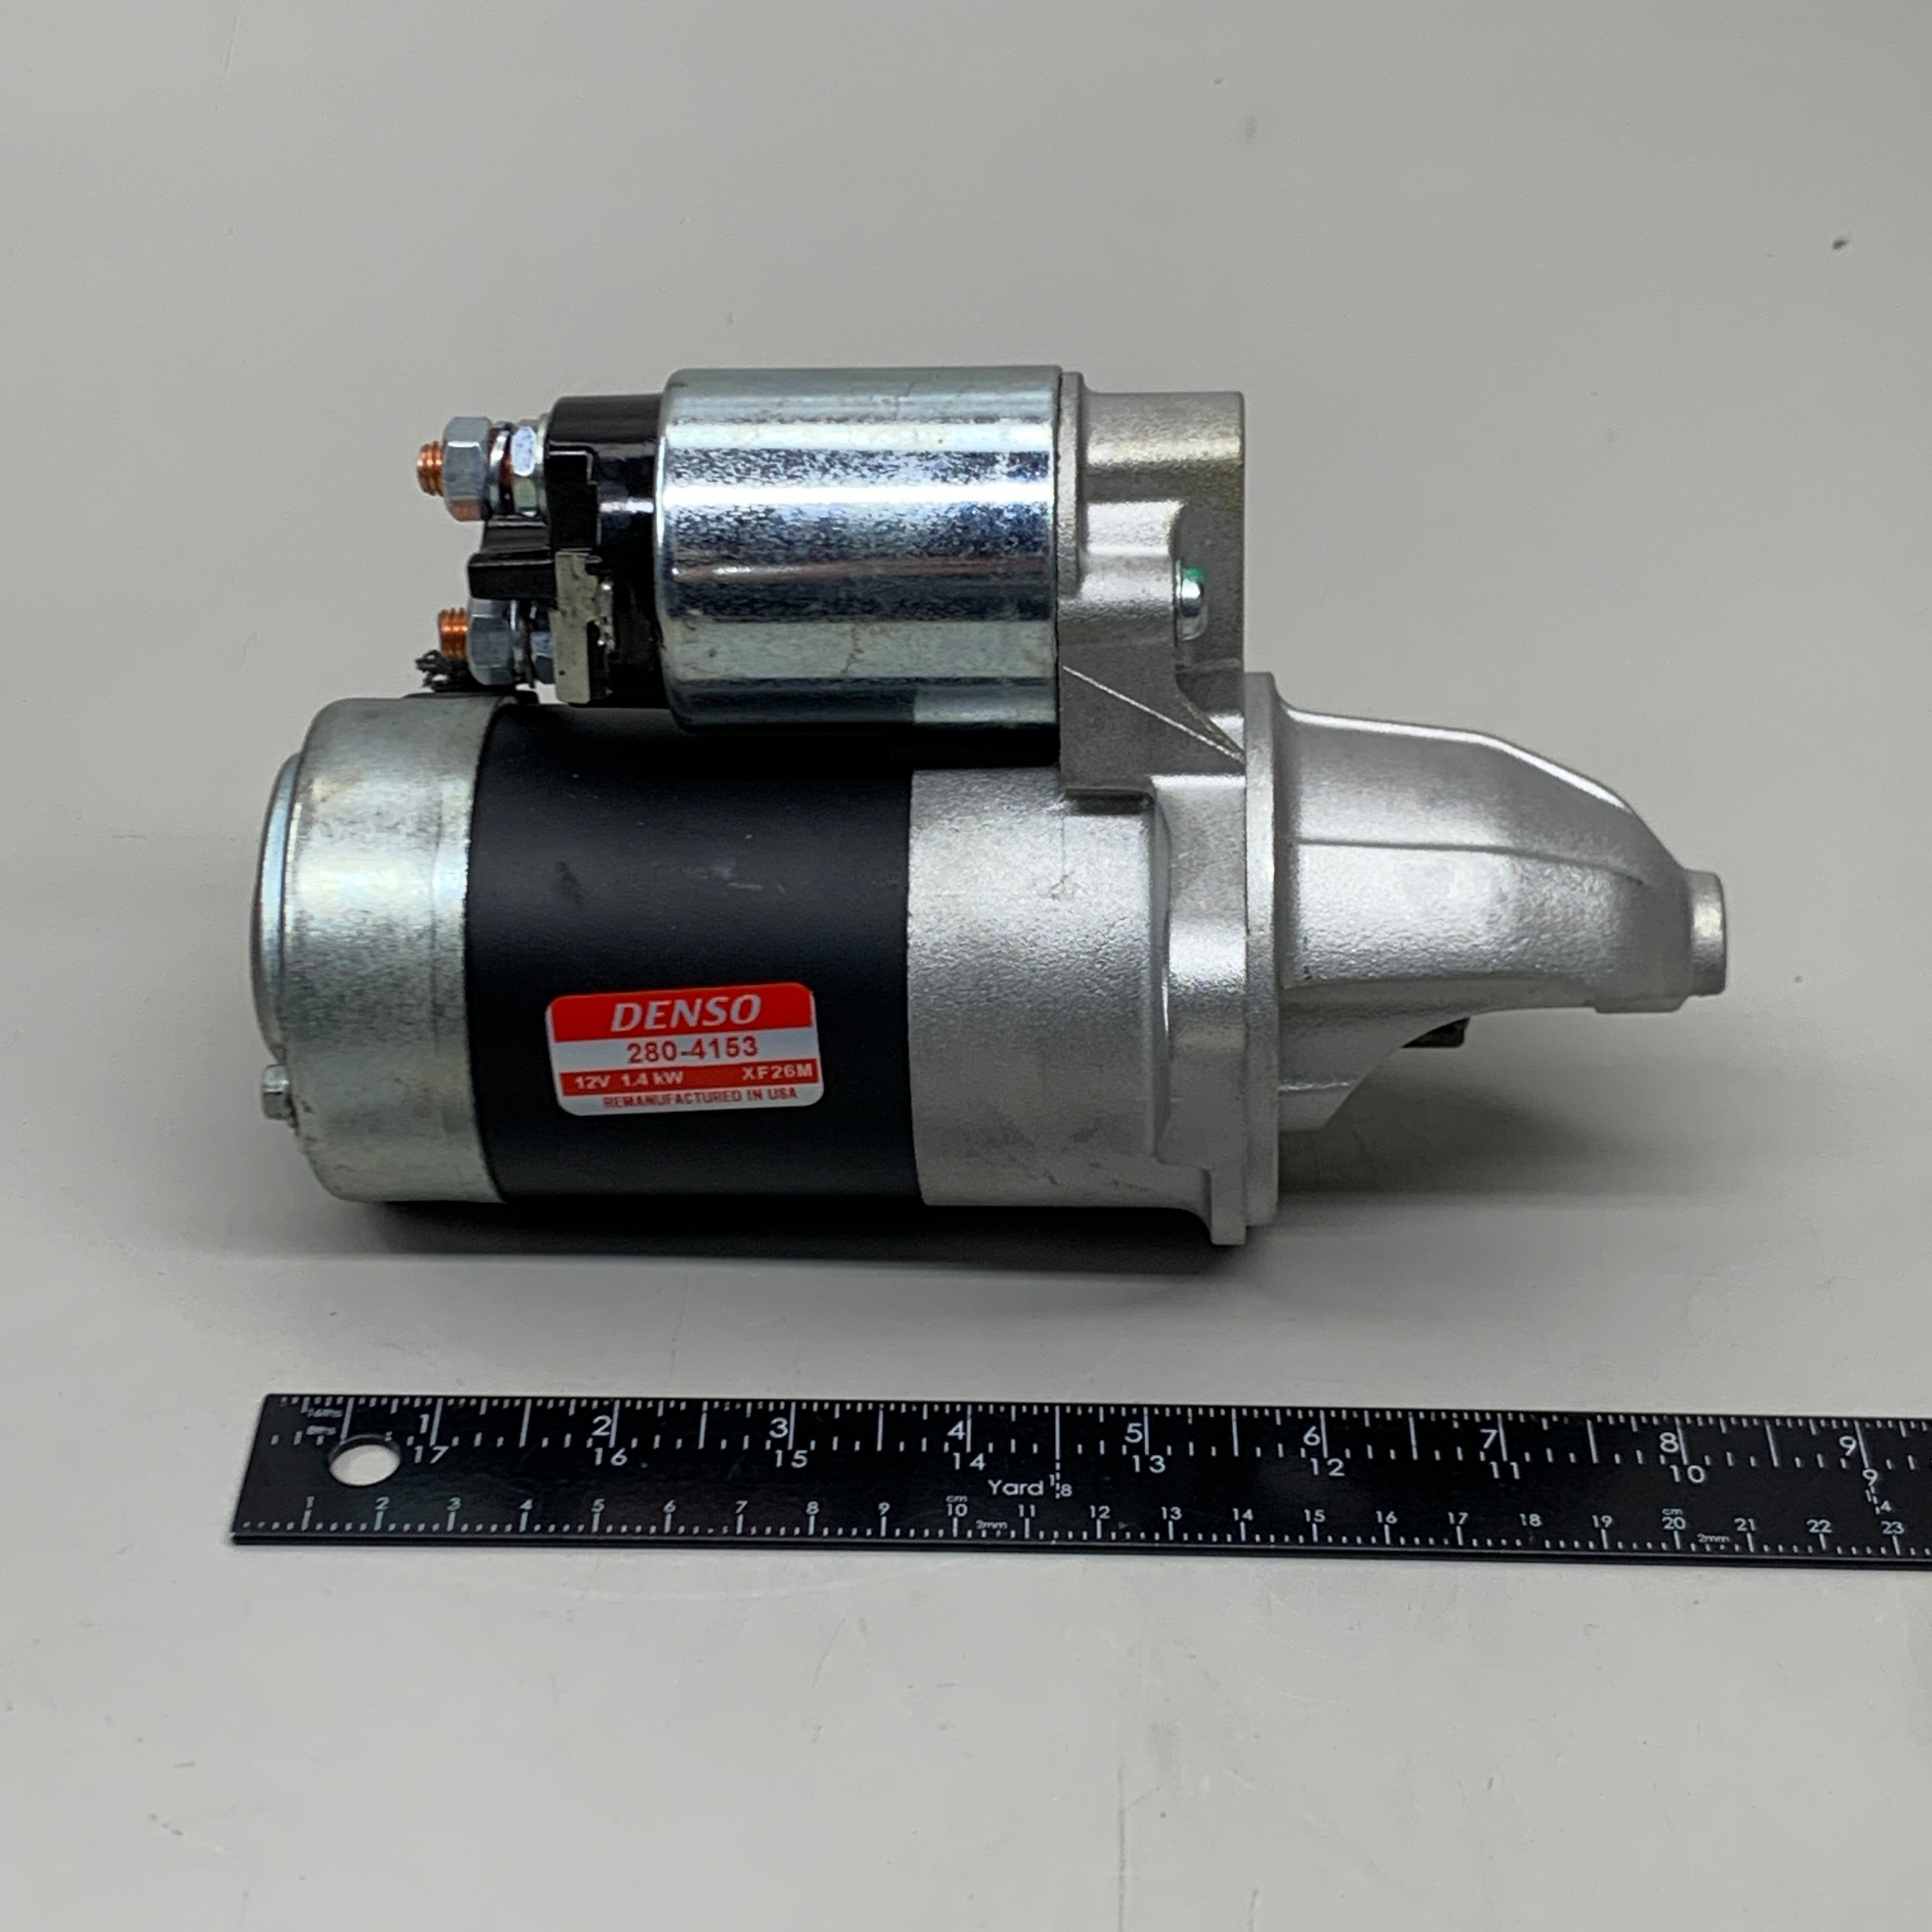 DENSO Motor Starter 1.4 kW (Remanufactured) 17723 480-4153 – PayWut